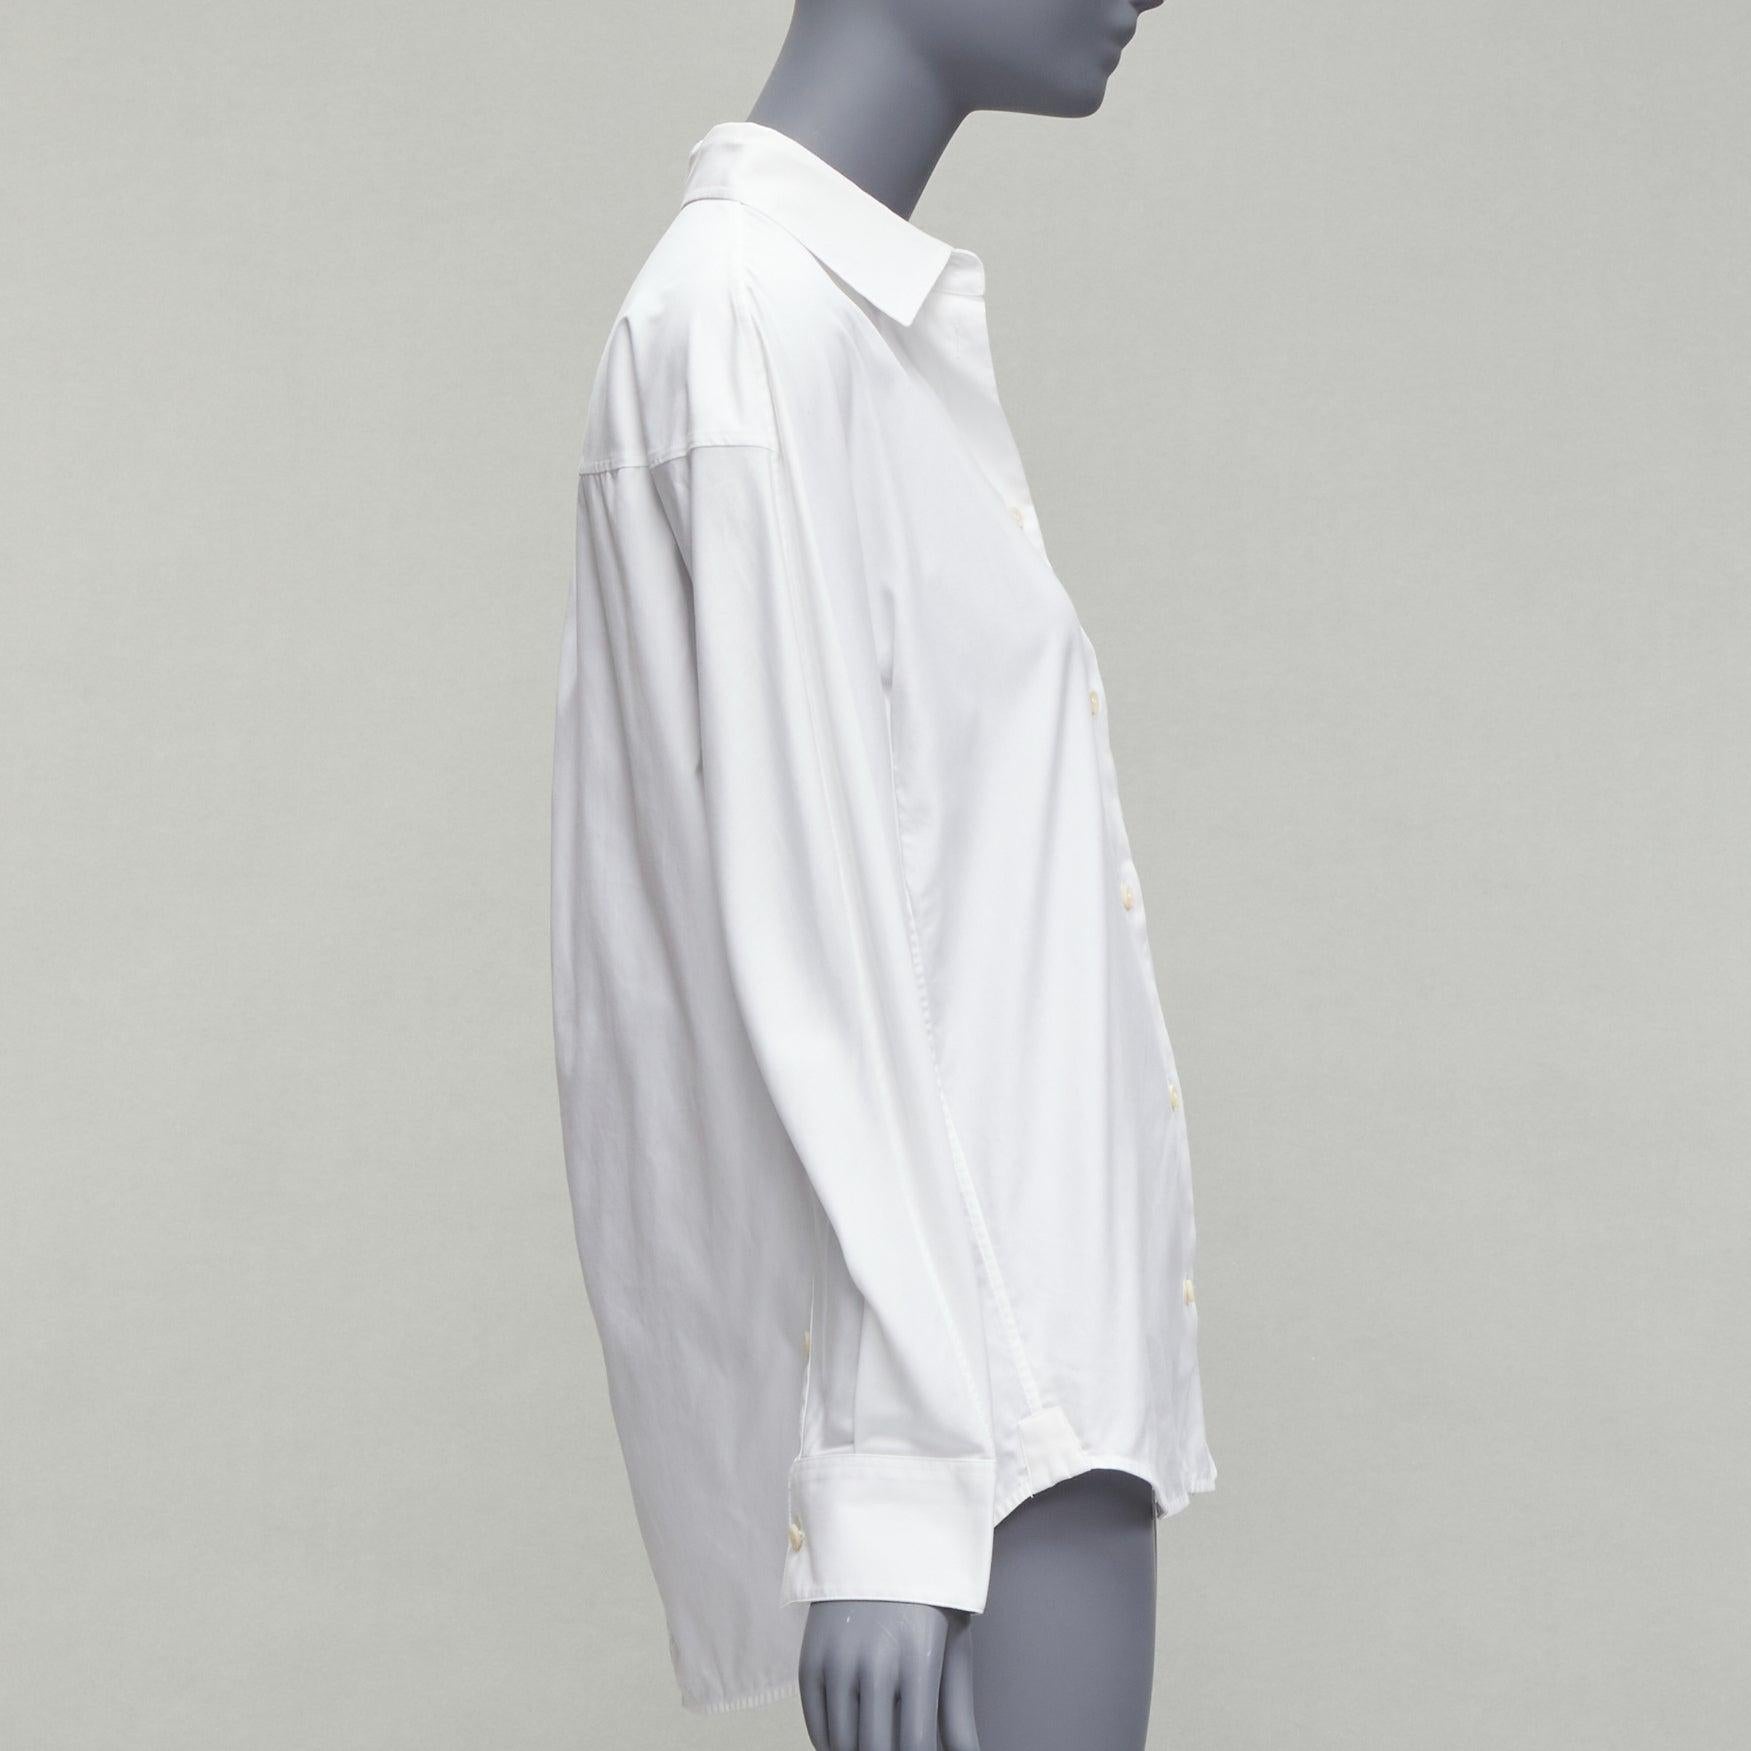 Gray BALENCIAGA 2016 white curved hem topstitch pocket shirt FR36 S